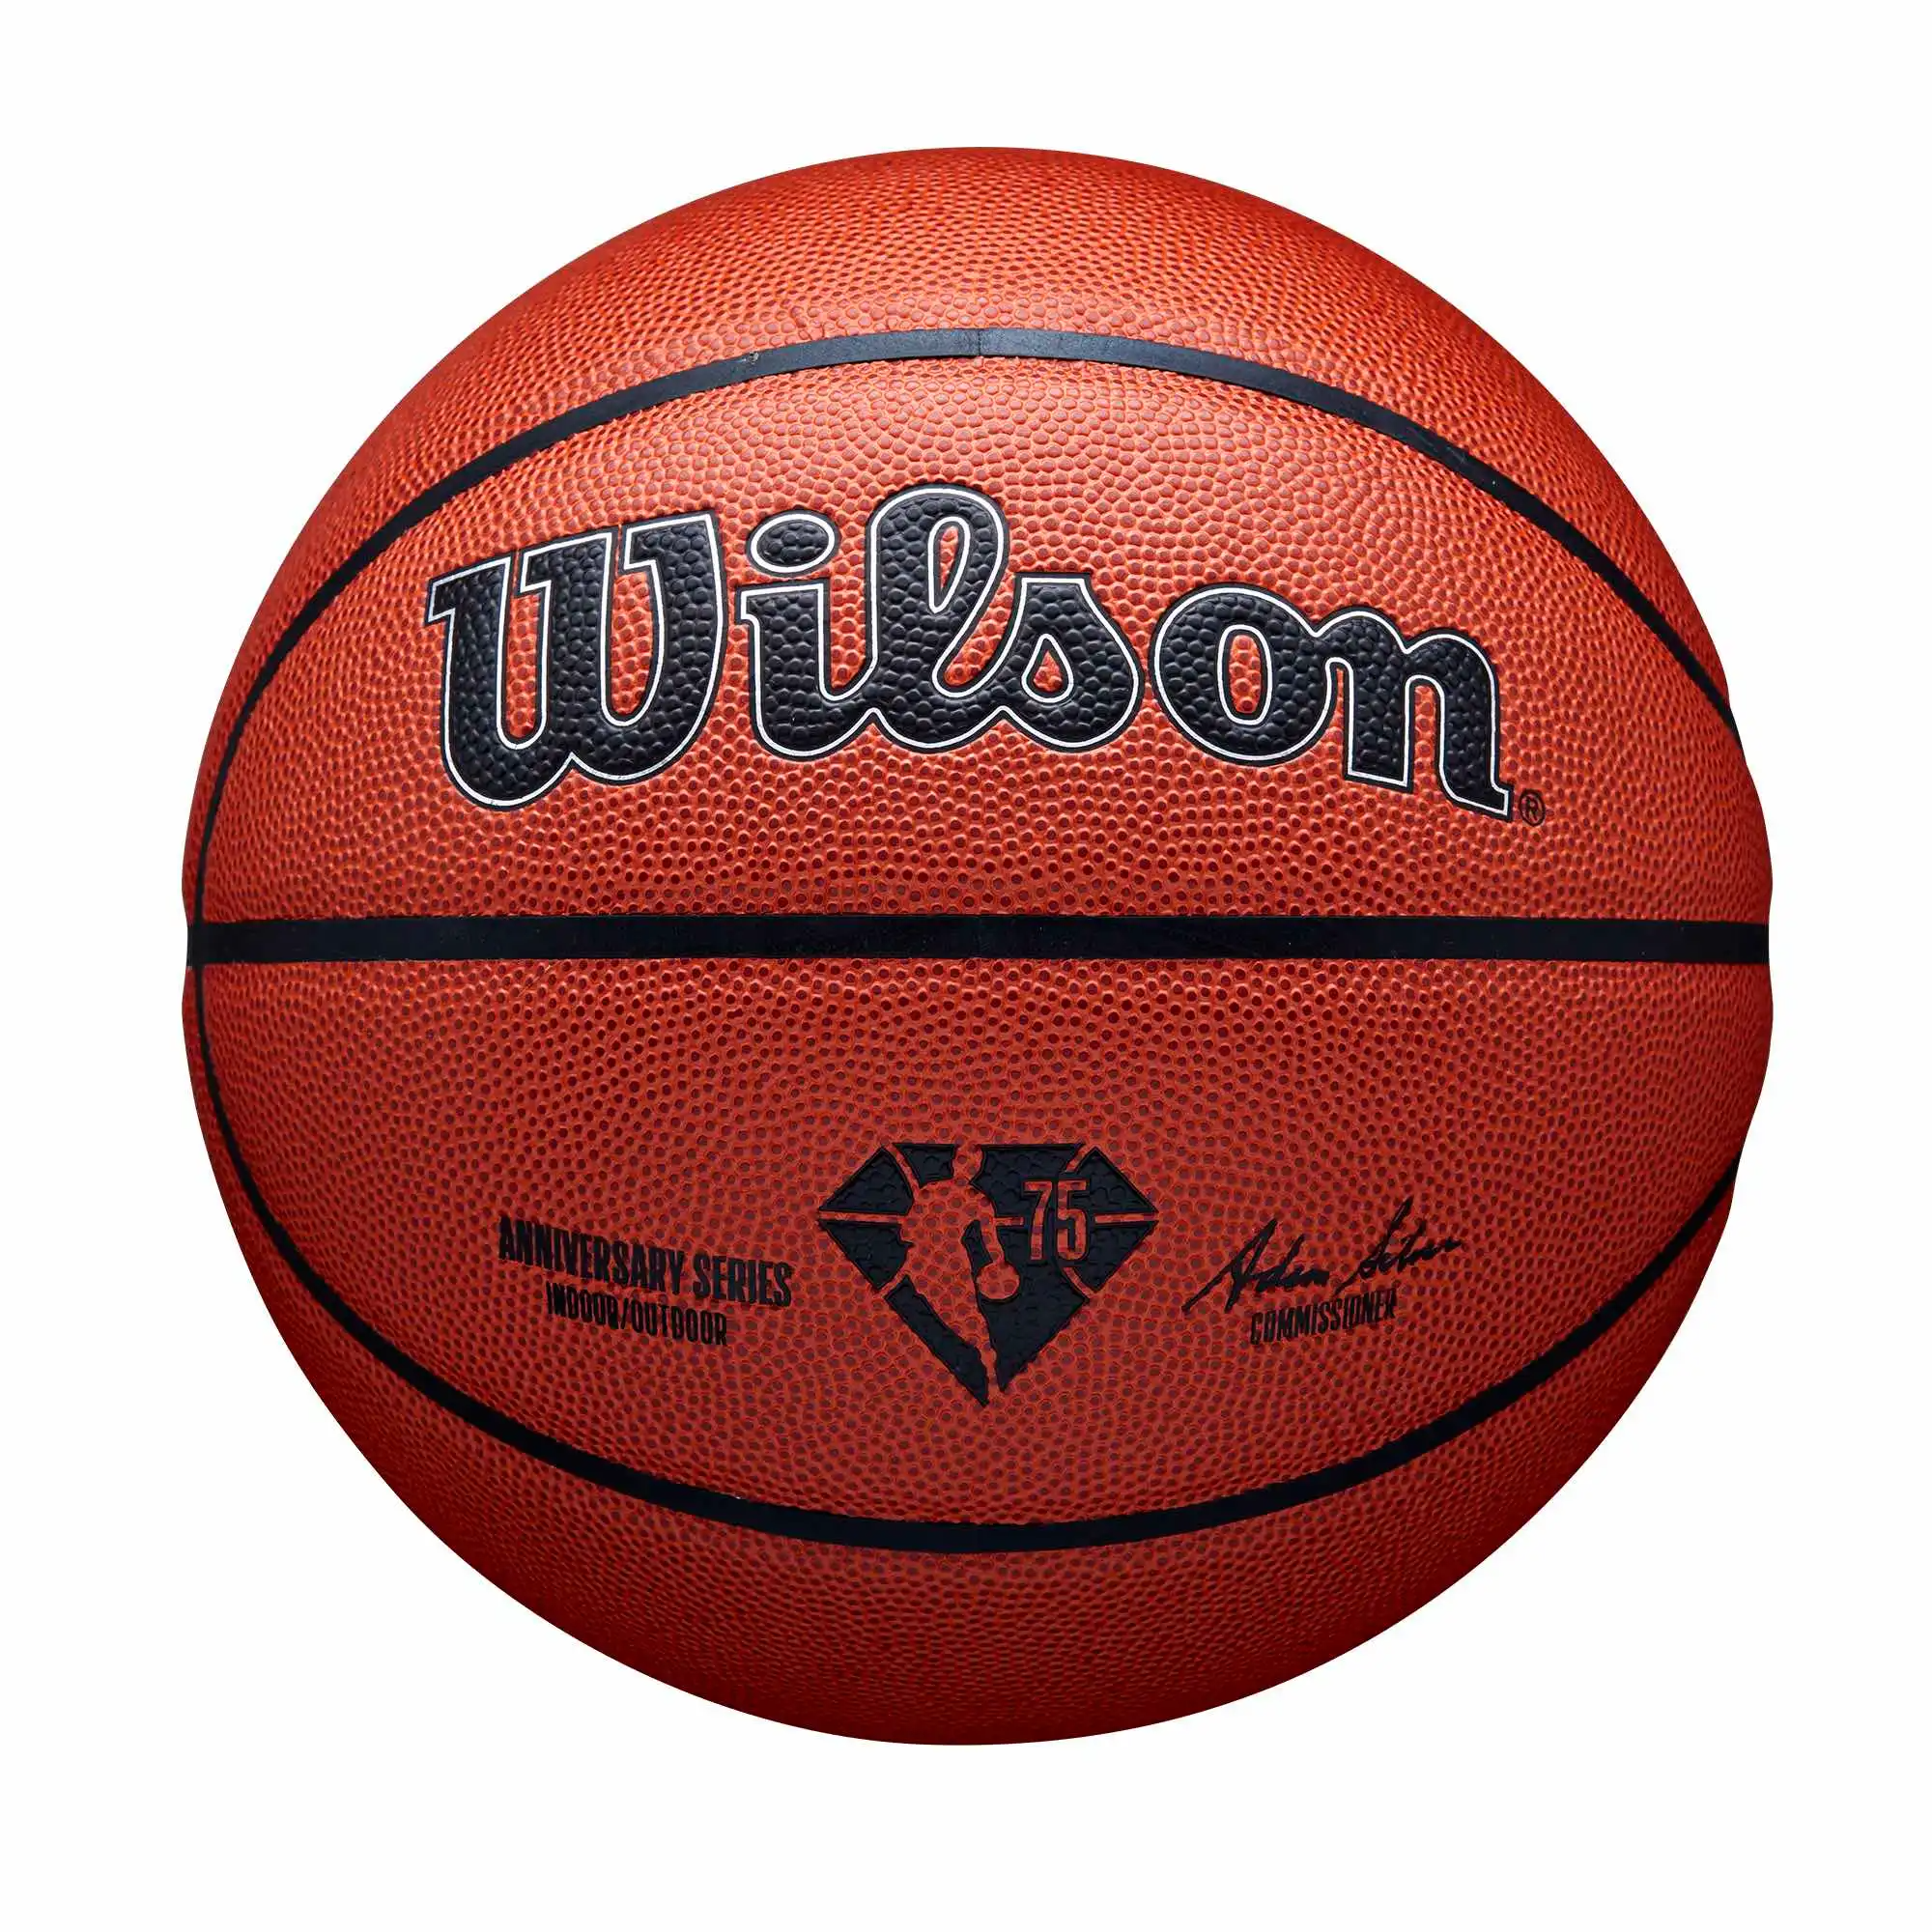 Ballon de Basketball Wilson 75ème Anniversaire de la NBA